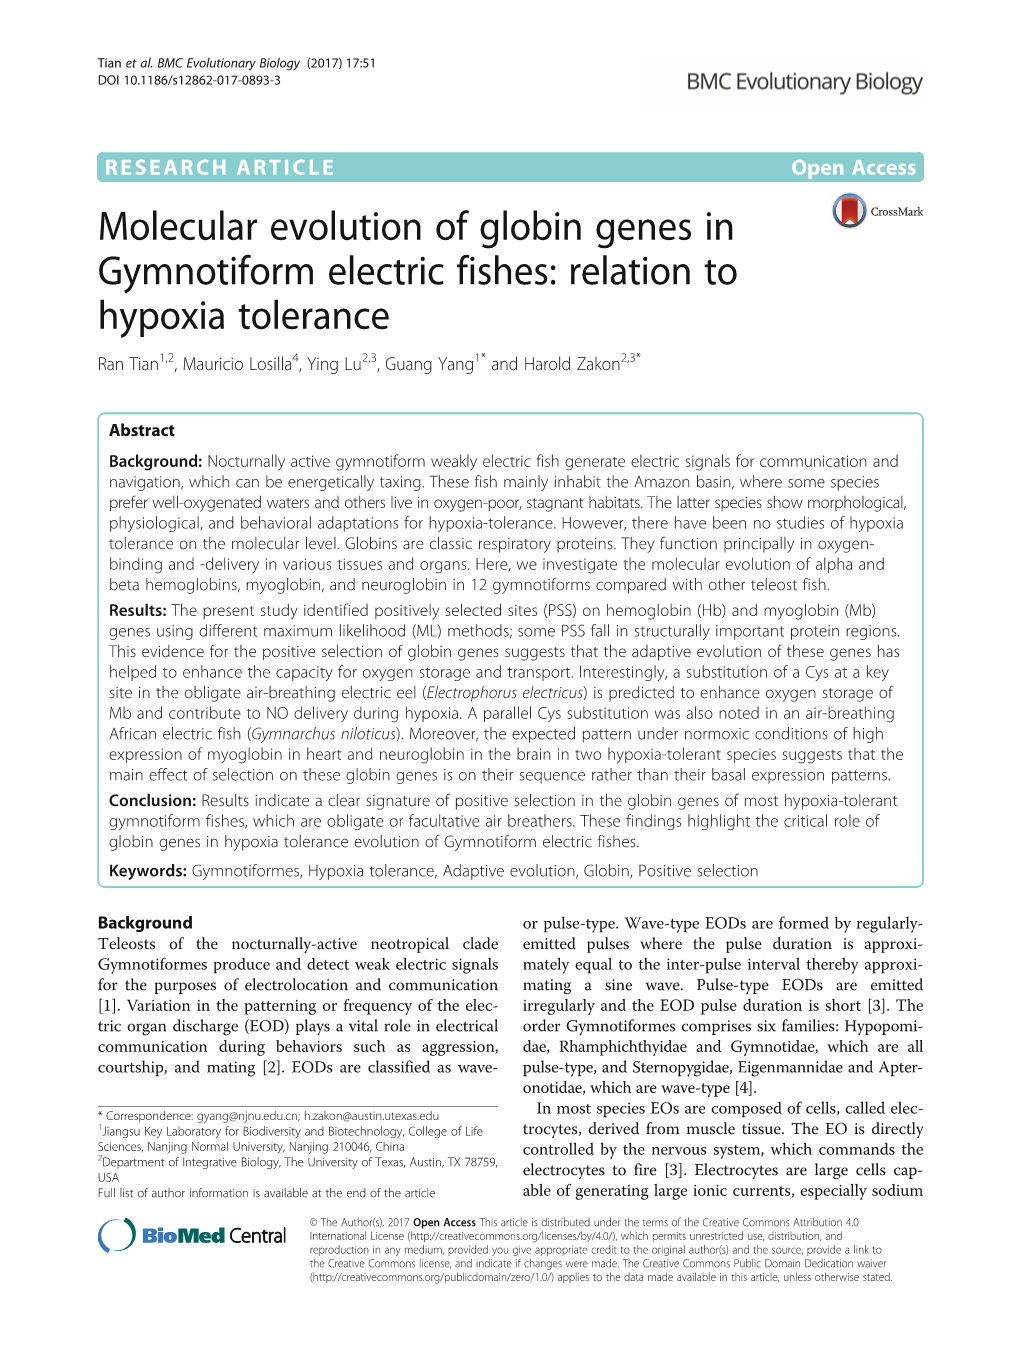 Molecular Evolution of Globin Genes in Gymnotiform Electric Fishes